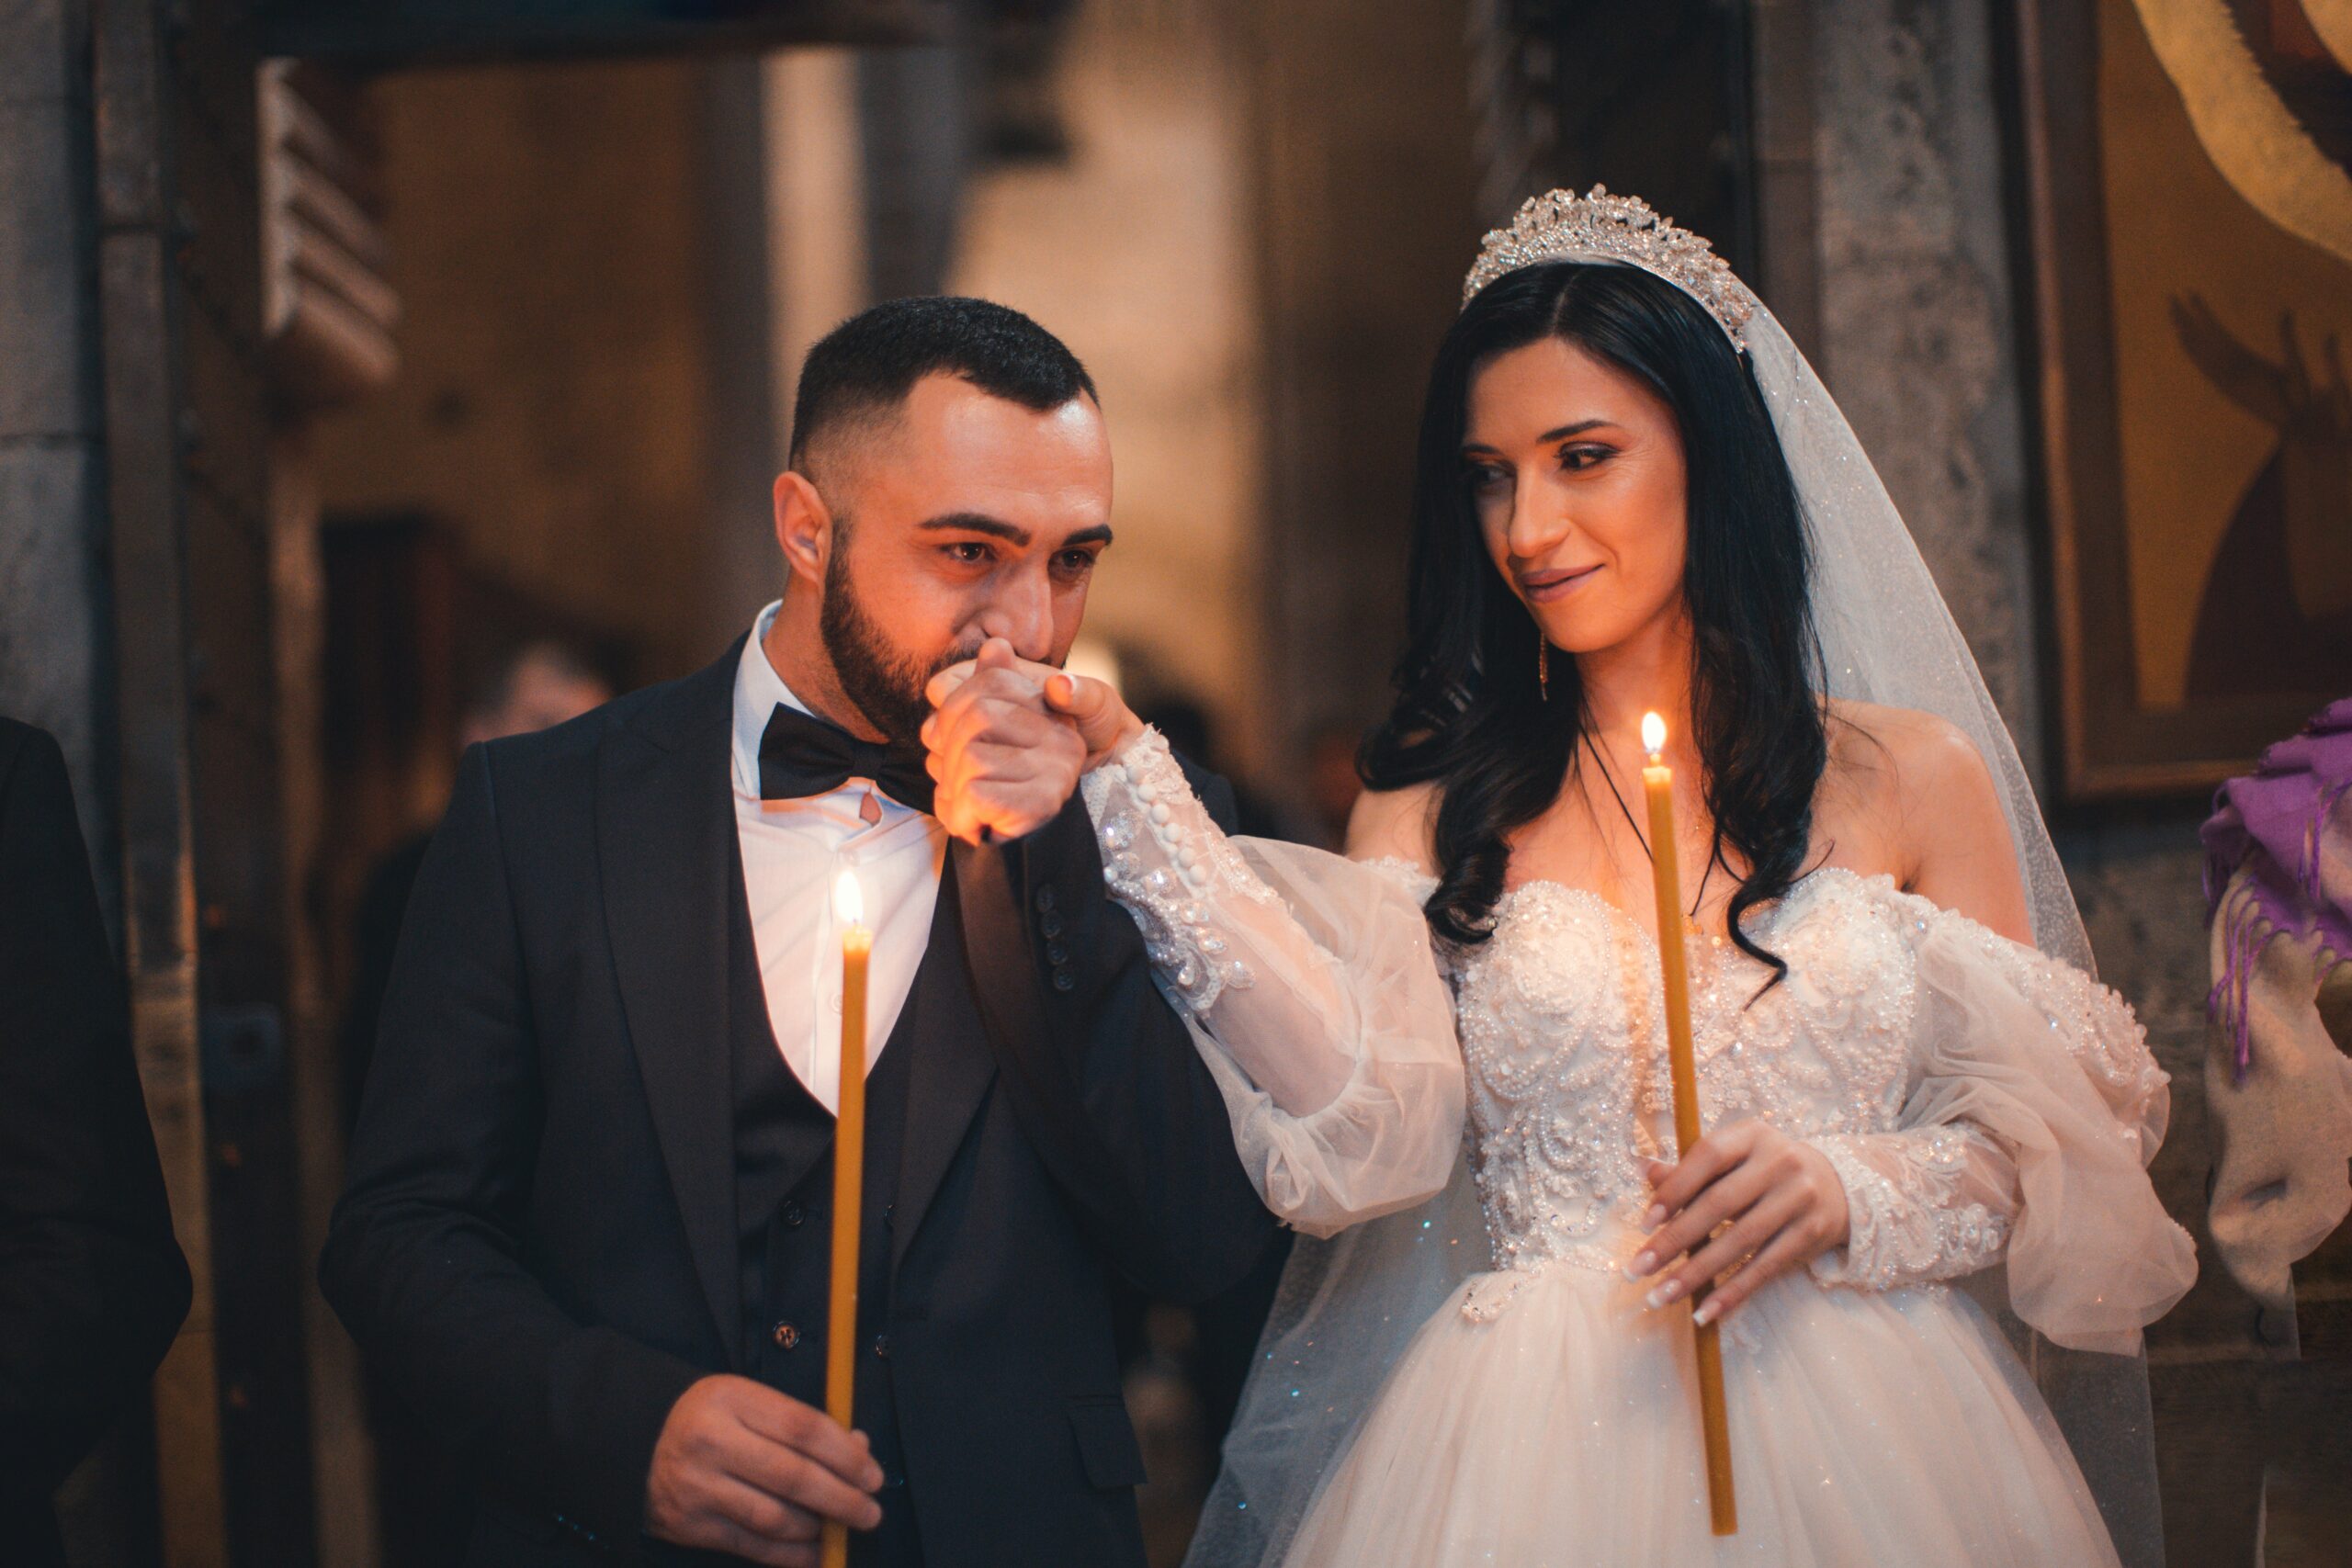 Life Together Begins Italian Wedding Celebration